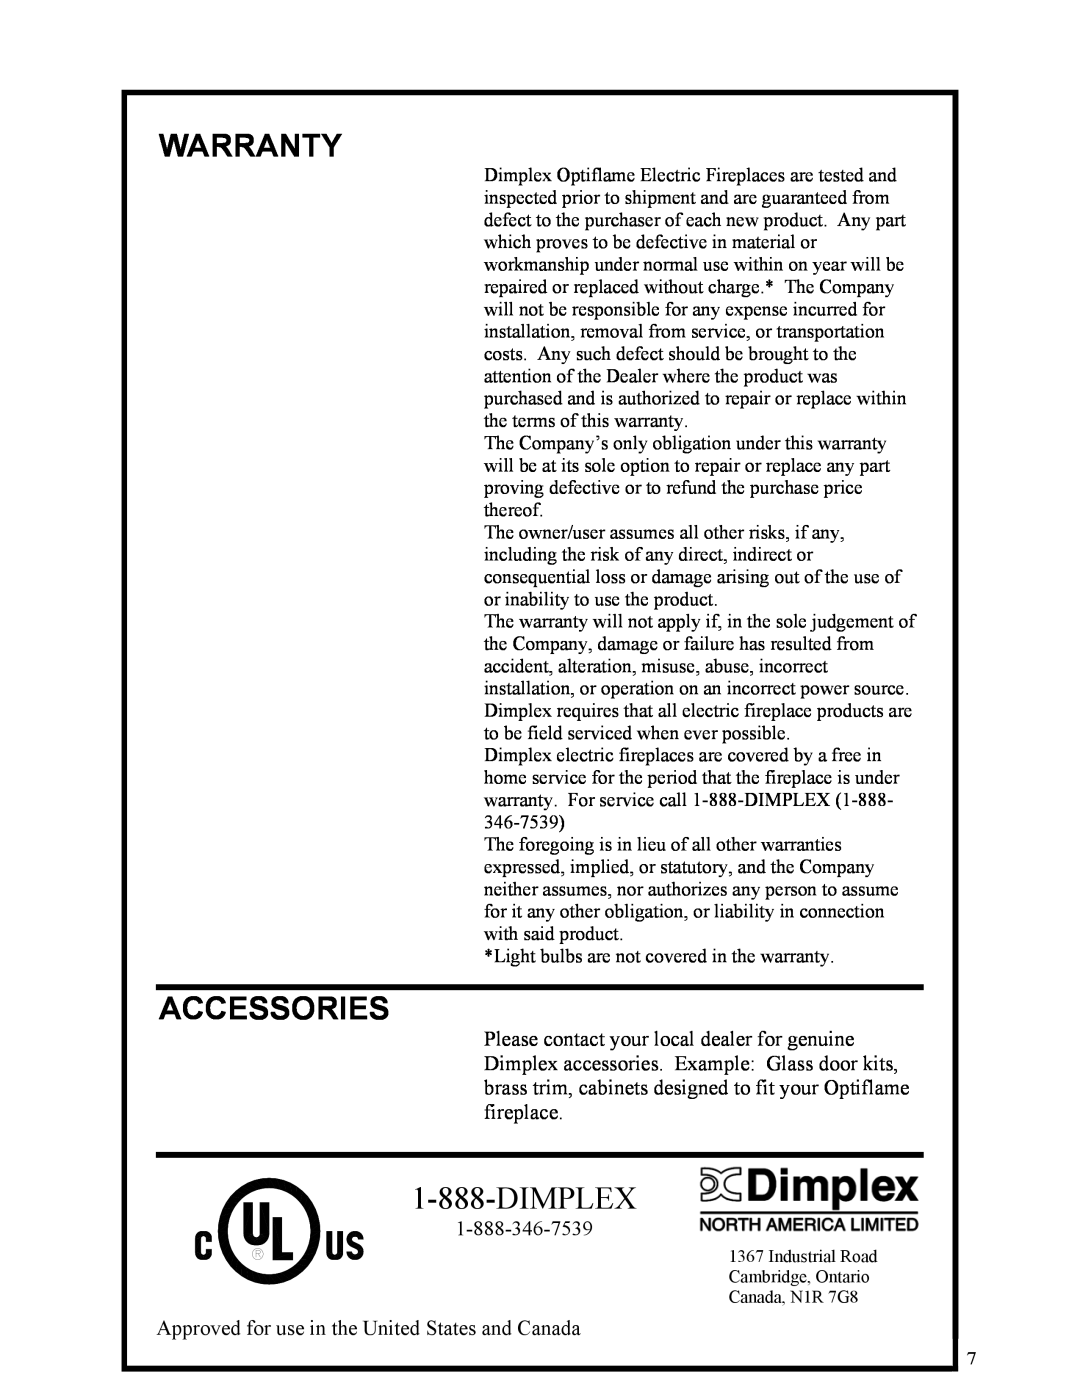 Dimplex Electric Fireplace manual Warranty, Accessories, Dimplex 